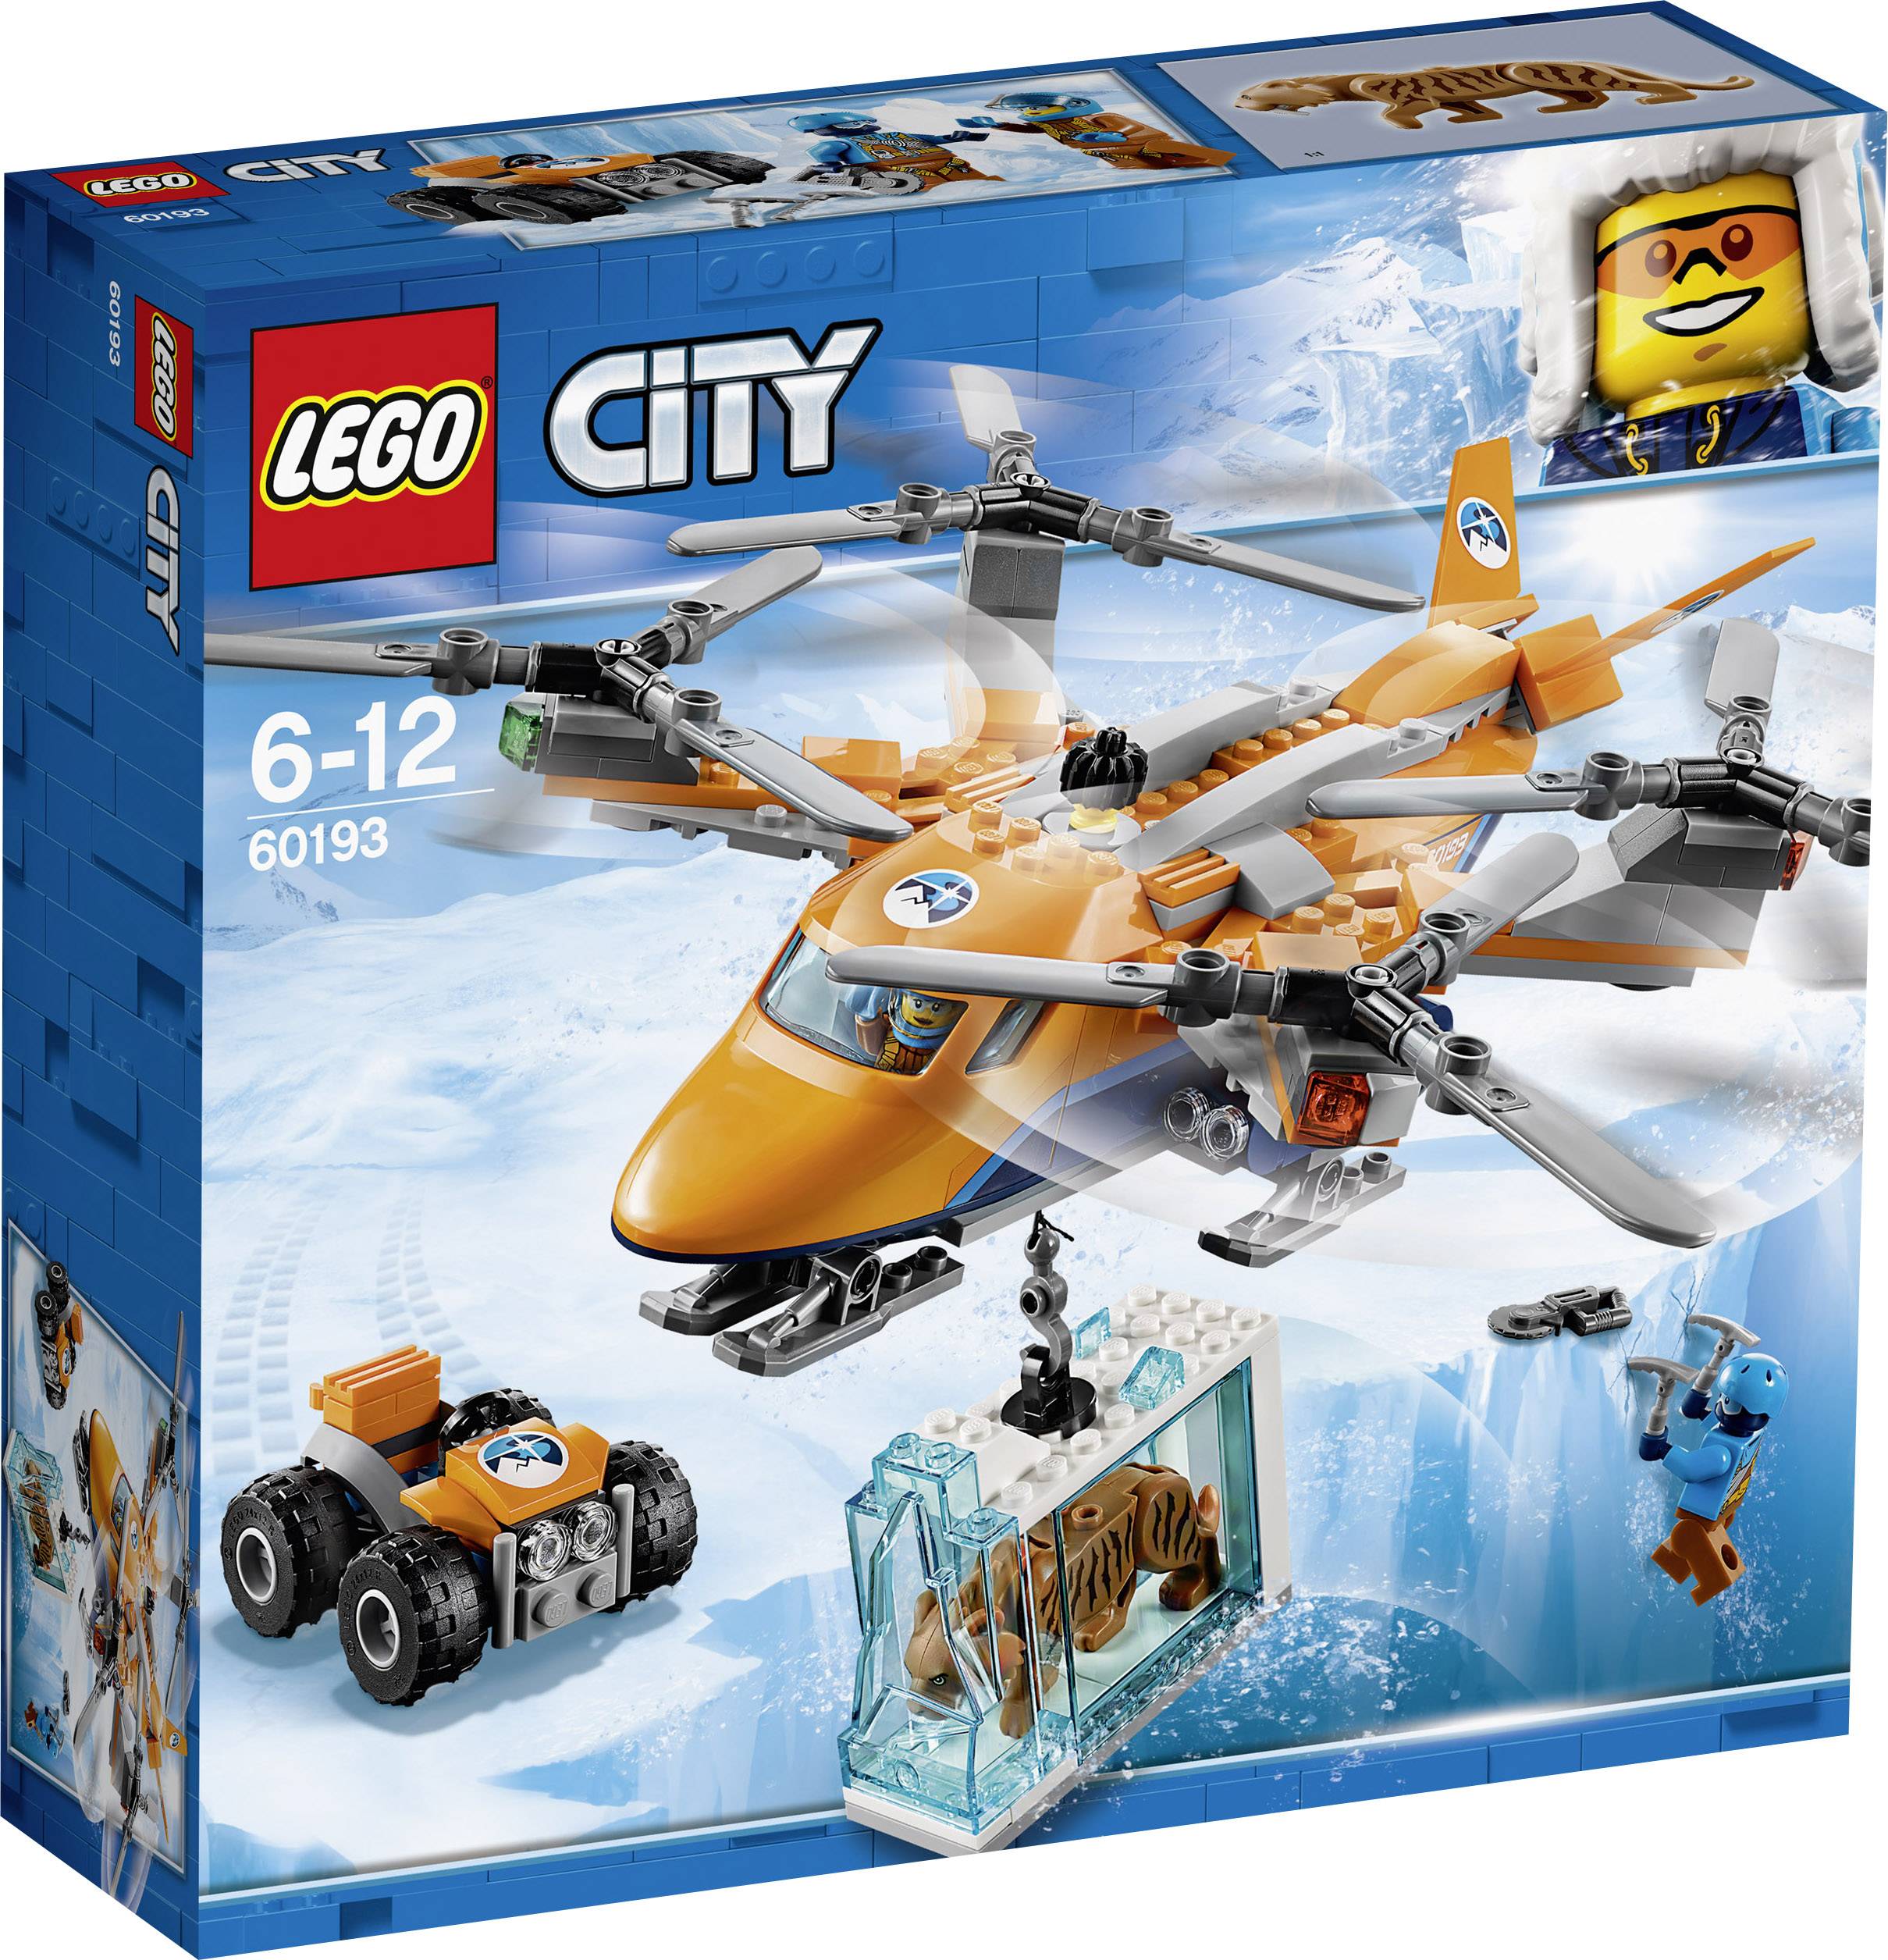 Aereo for Transport Arctic New Lego City 60193 